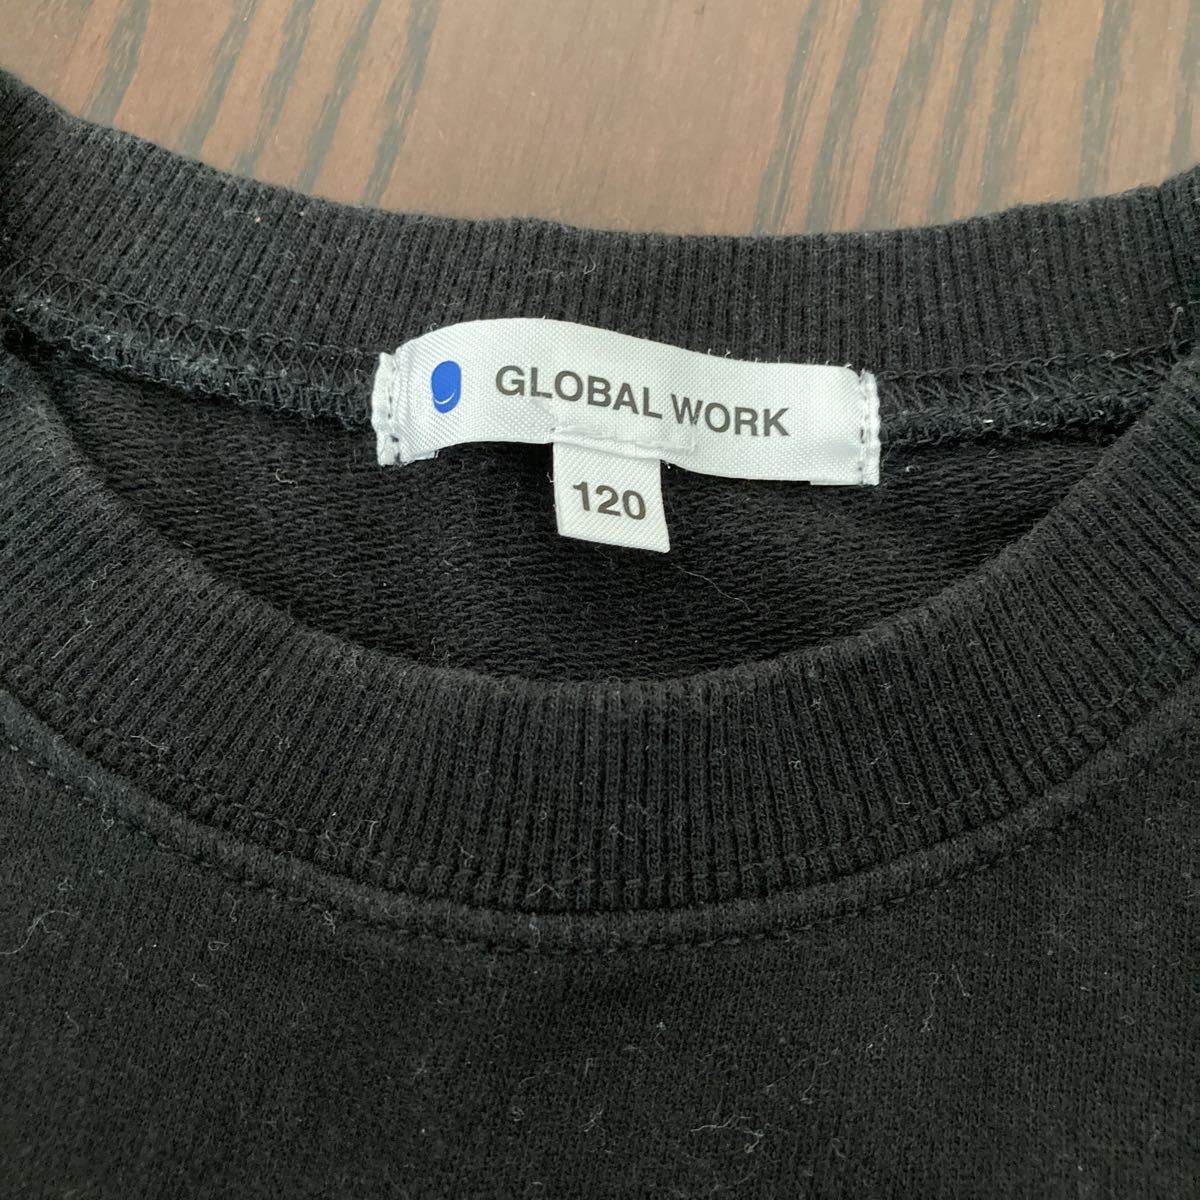  б/у Kids трикотажный джемпер с длинным рукавом футболка 2 шт. комплект GLOBALWORK FREAK\'S STORE черный Brown размер 120.